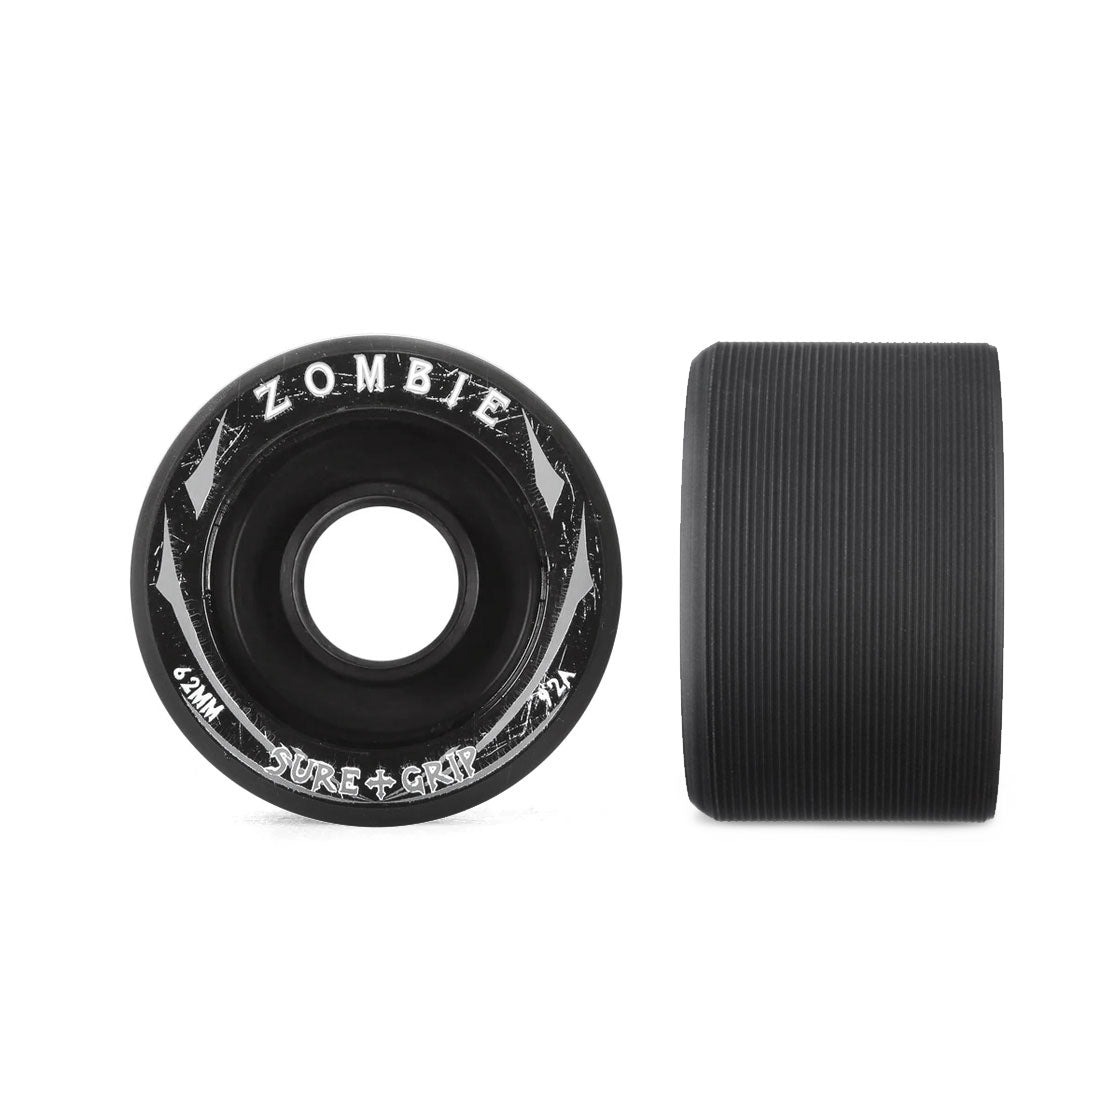 Sure-Grip Zombie Max 62x44mm 4pk Black 92A Roller Skate Wheels